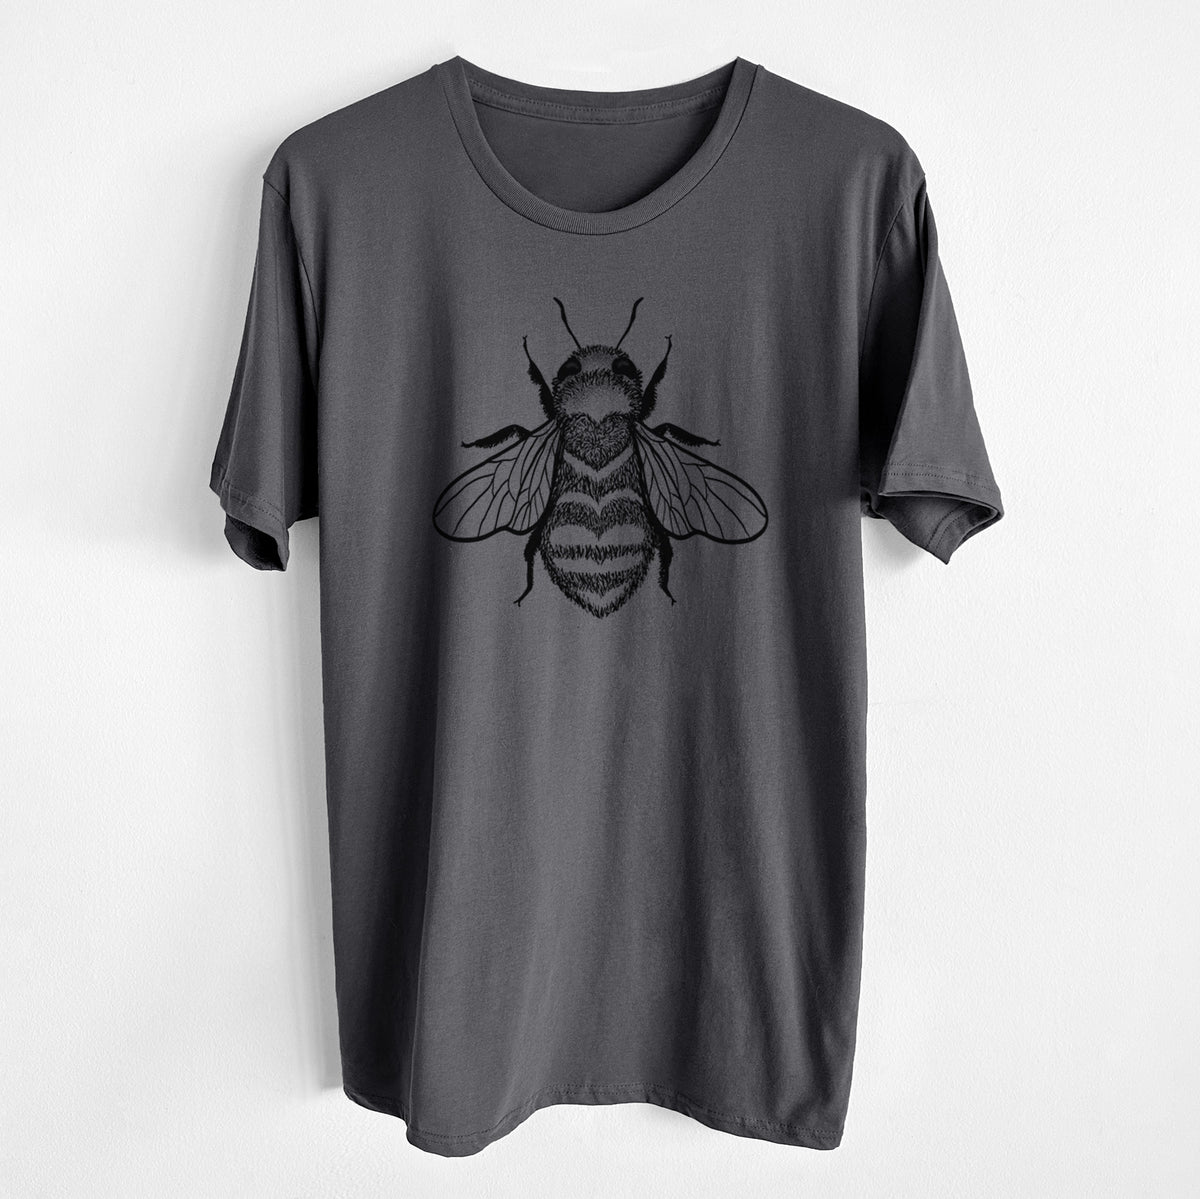 Bee Love - Unisex Crewneck - Made in USA - 100% Organic Cotton